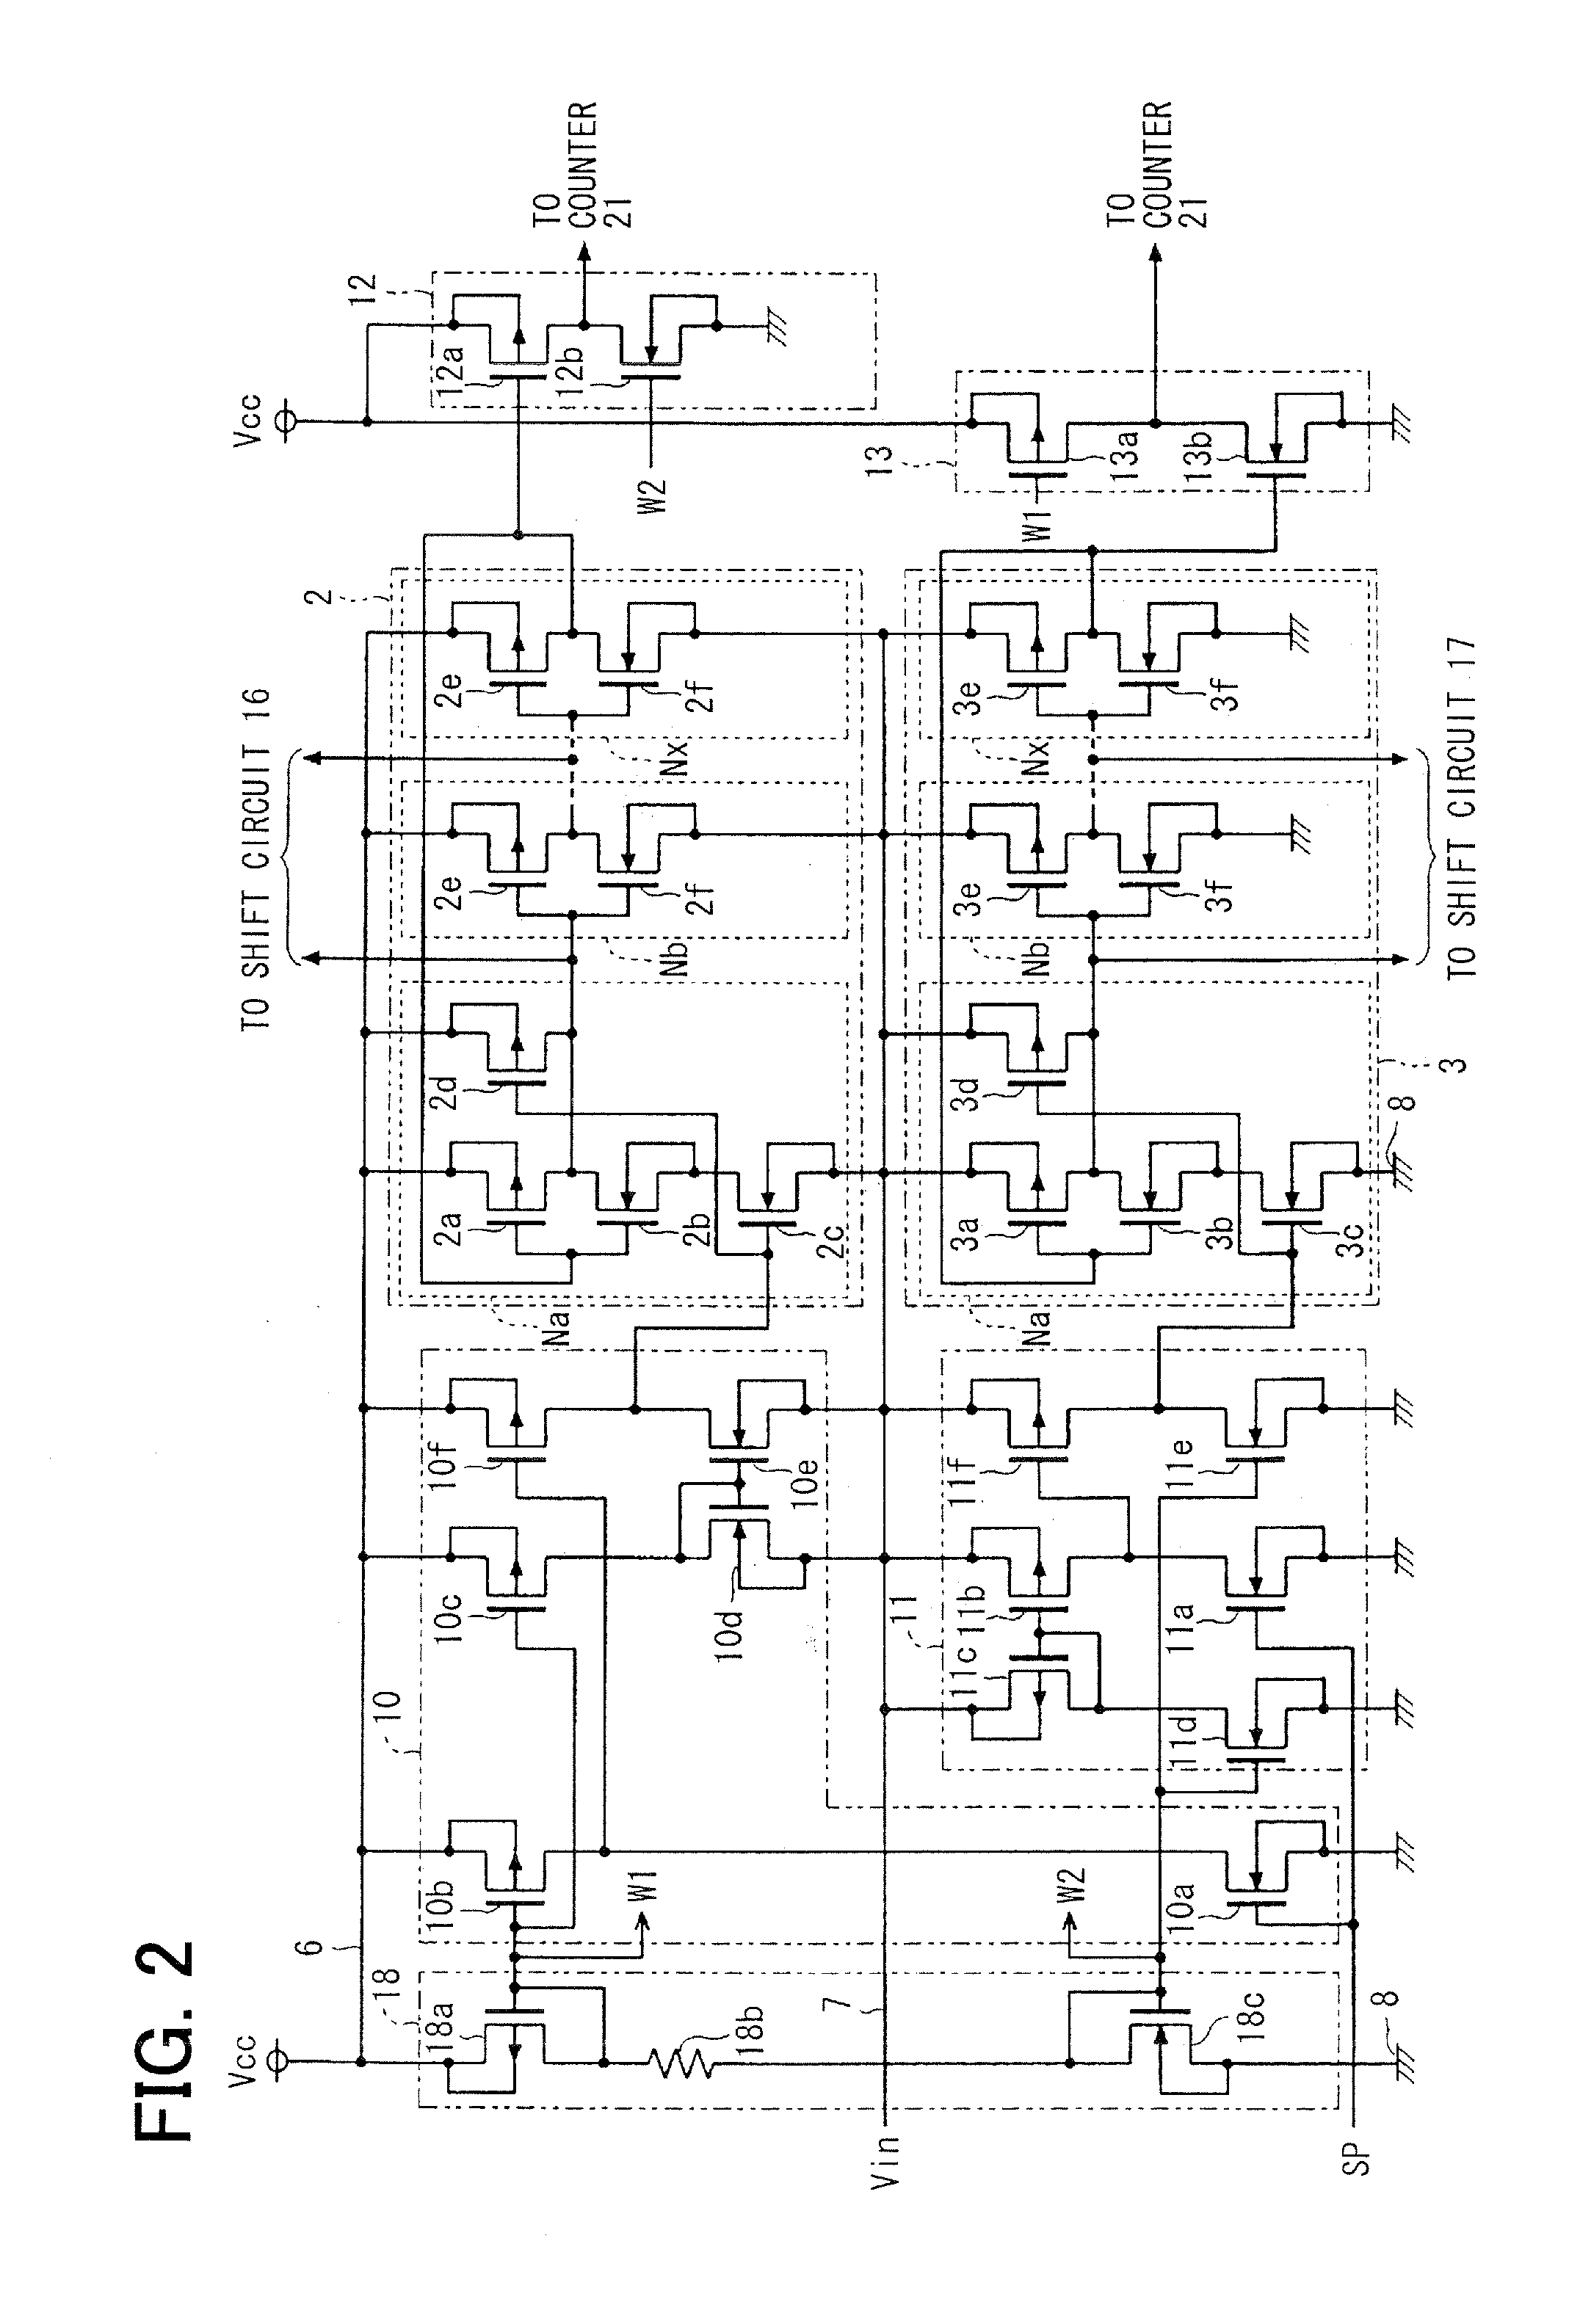 A/d converter circuit